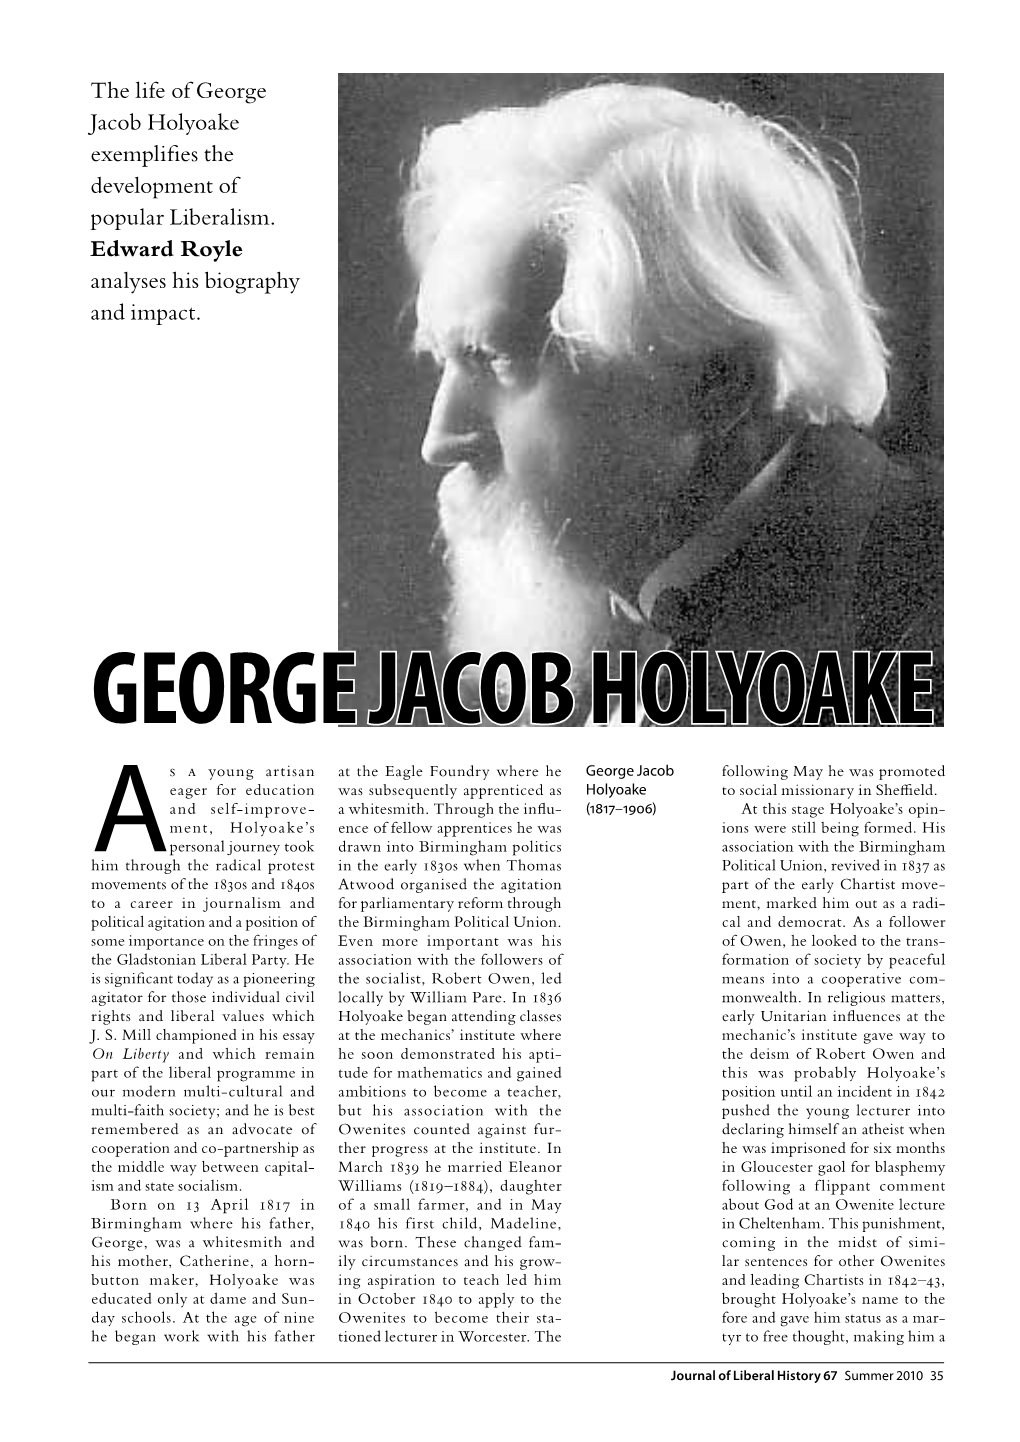 George Jacob Holyoake Exemplifies the Development of Popular Liberalism